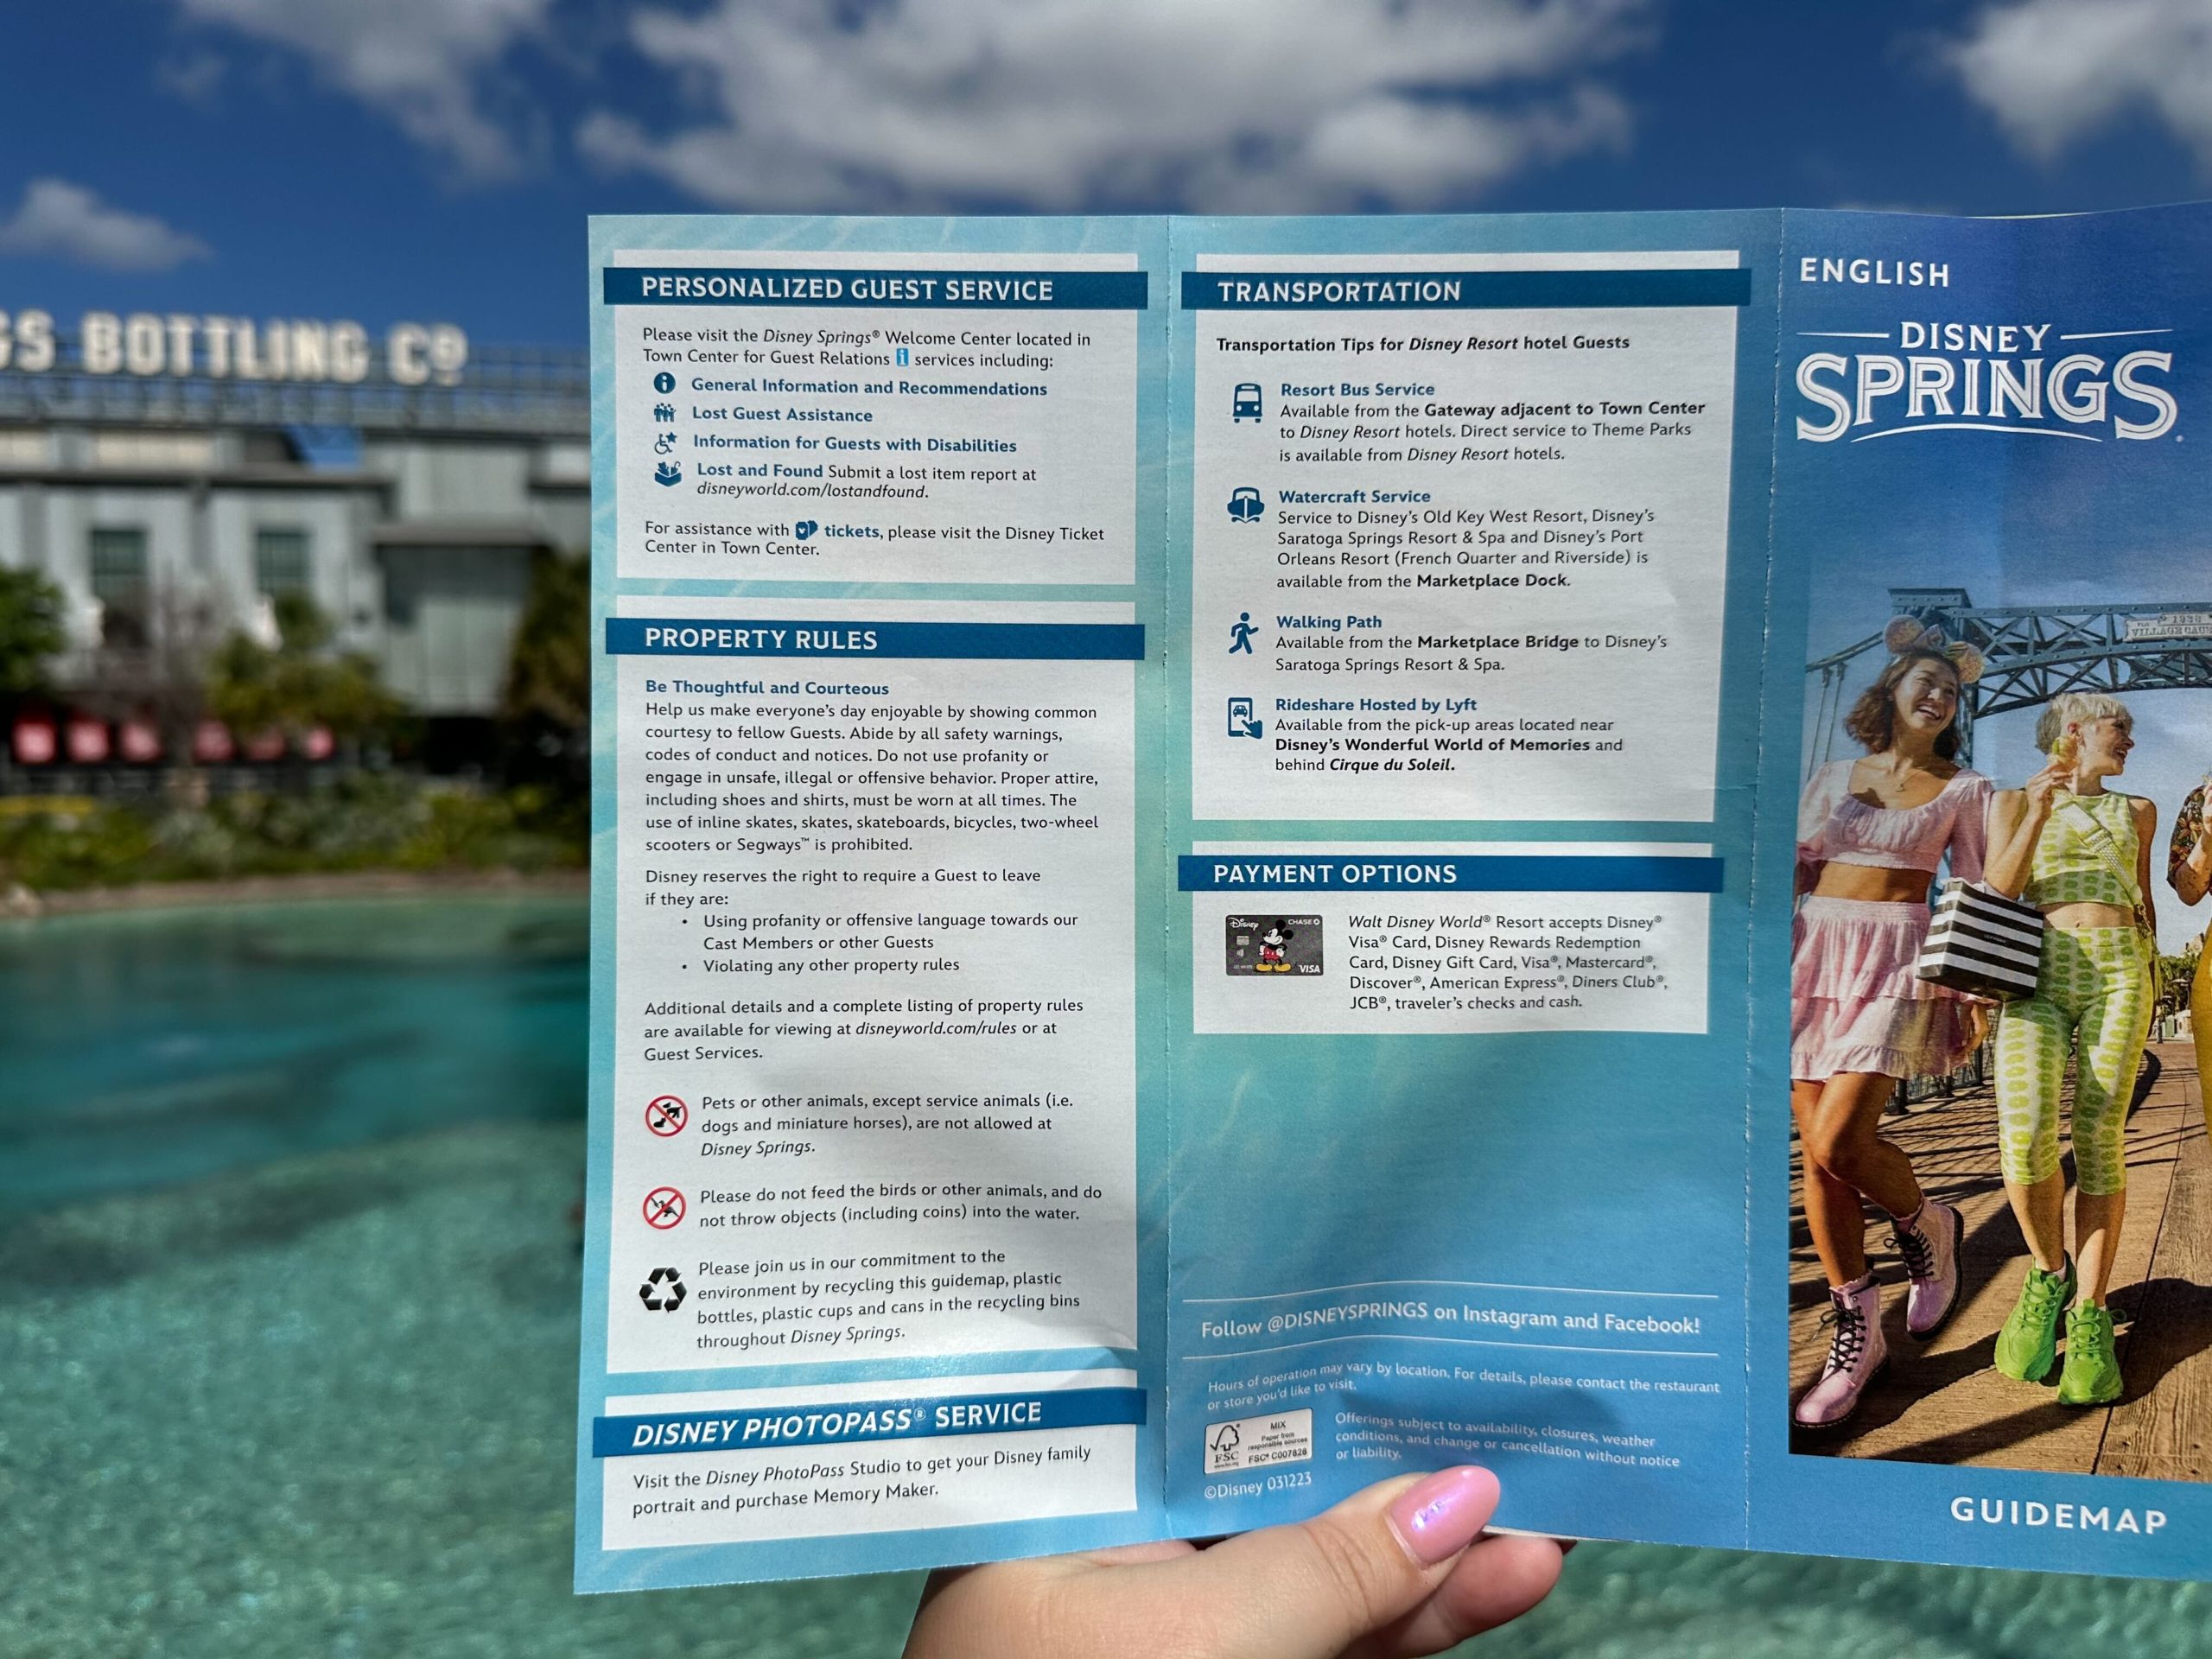 Disney Springs Guidemap